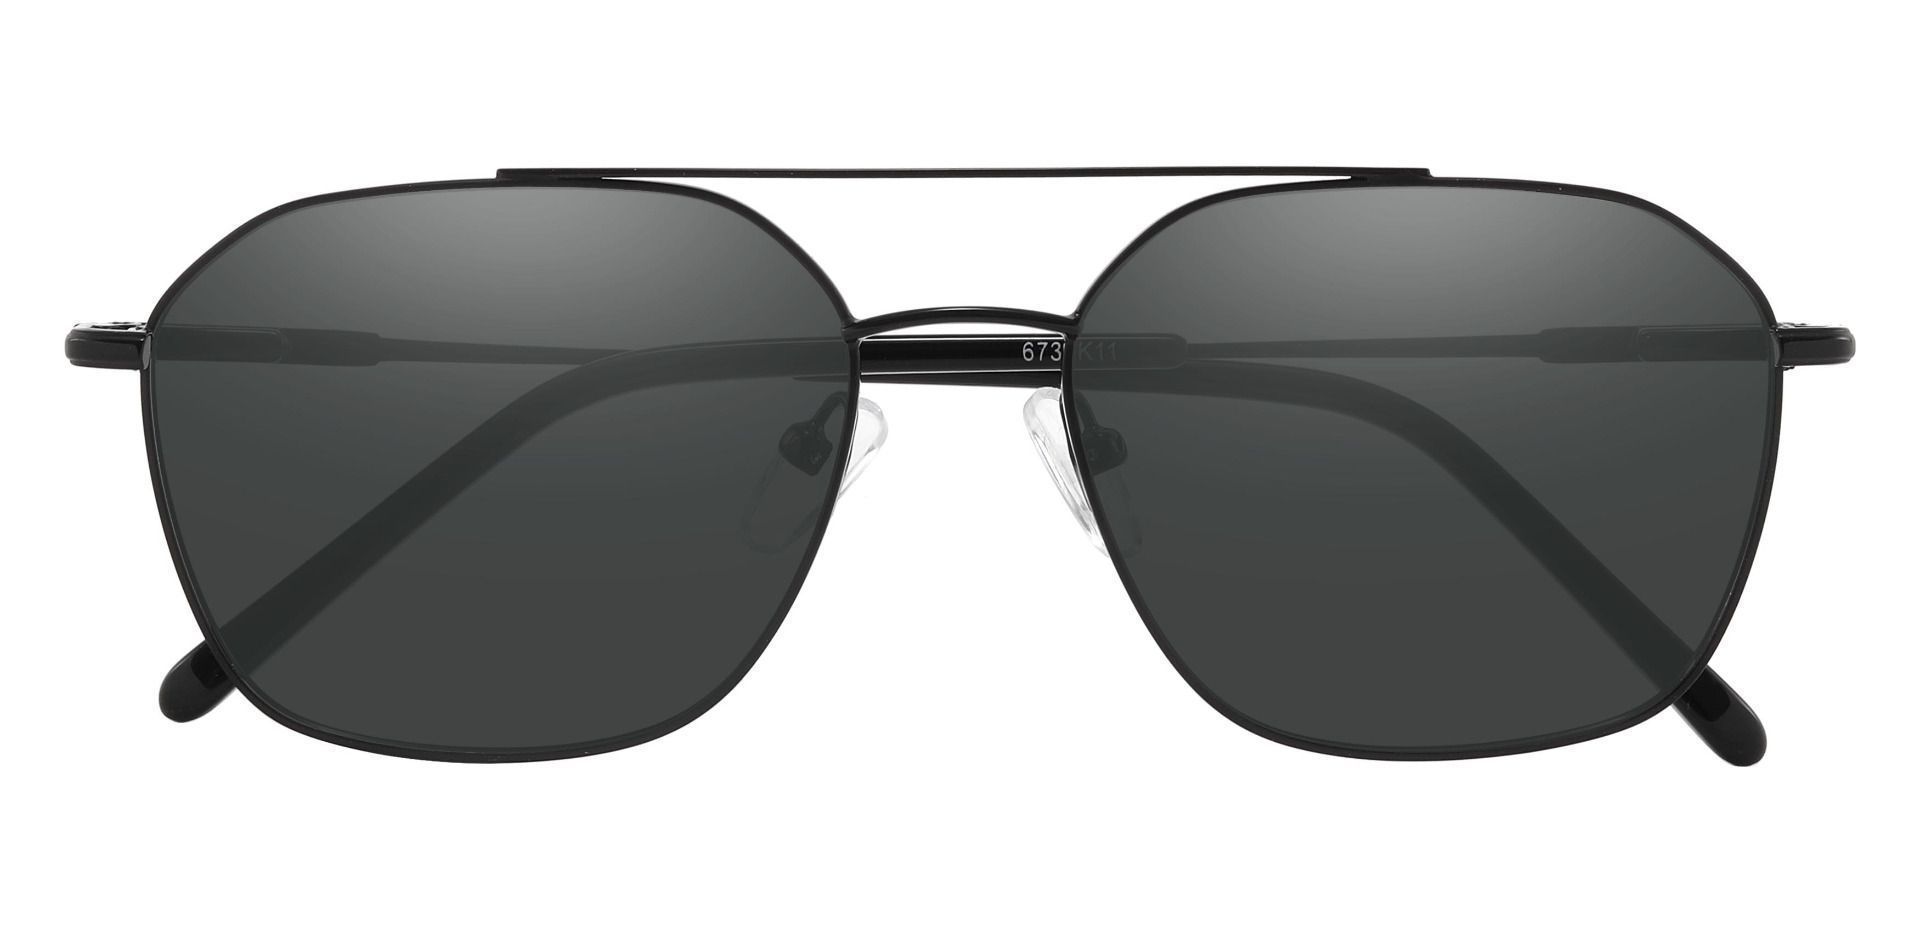 Harvey Aviator Non-Rx Sunglasses - Black Frame With Gray Lenses